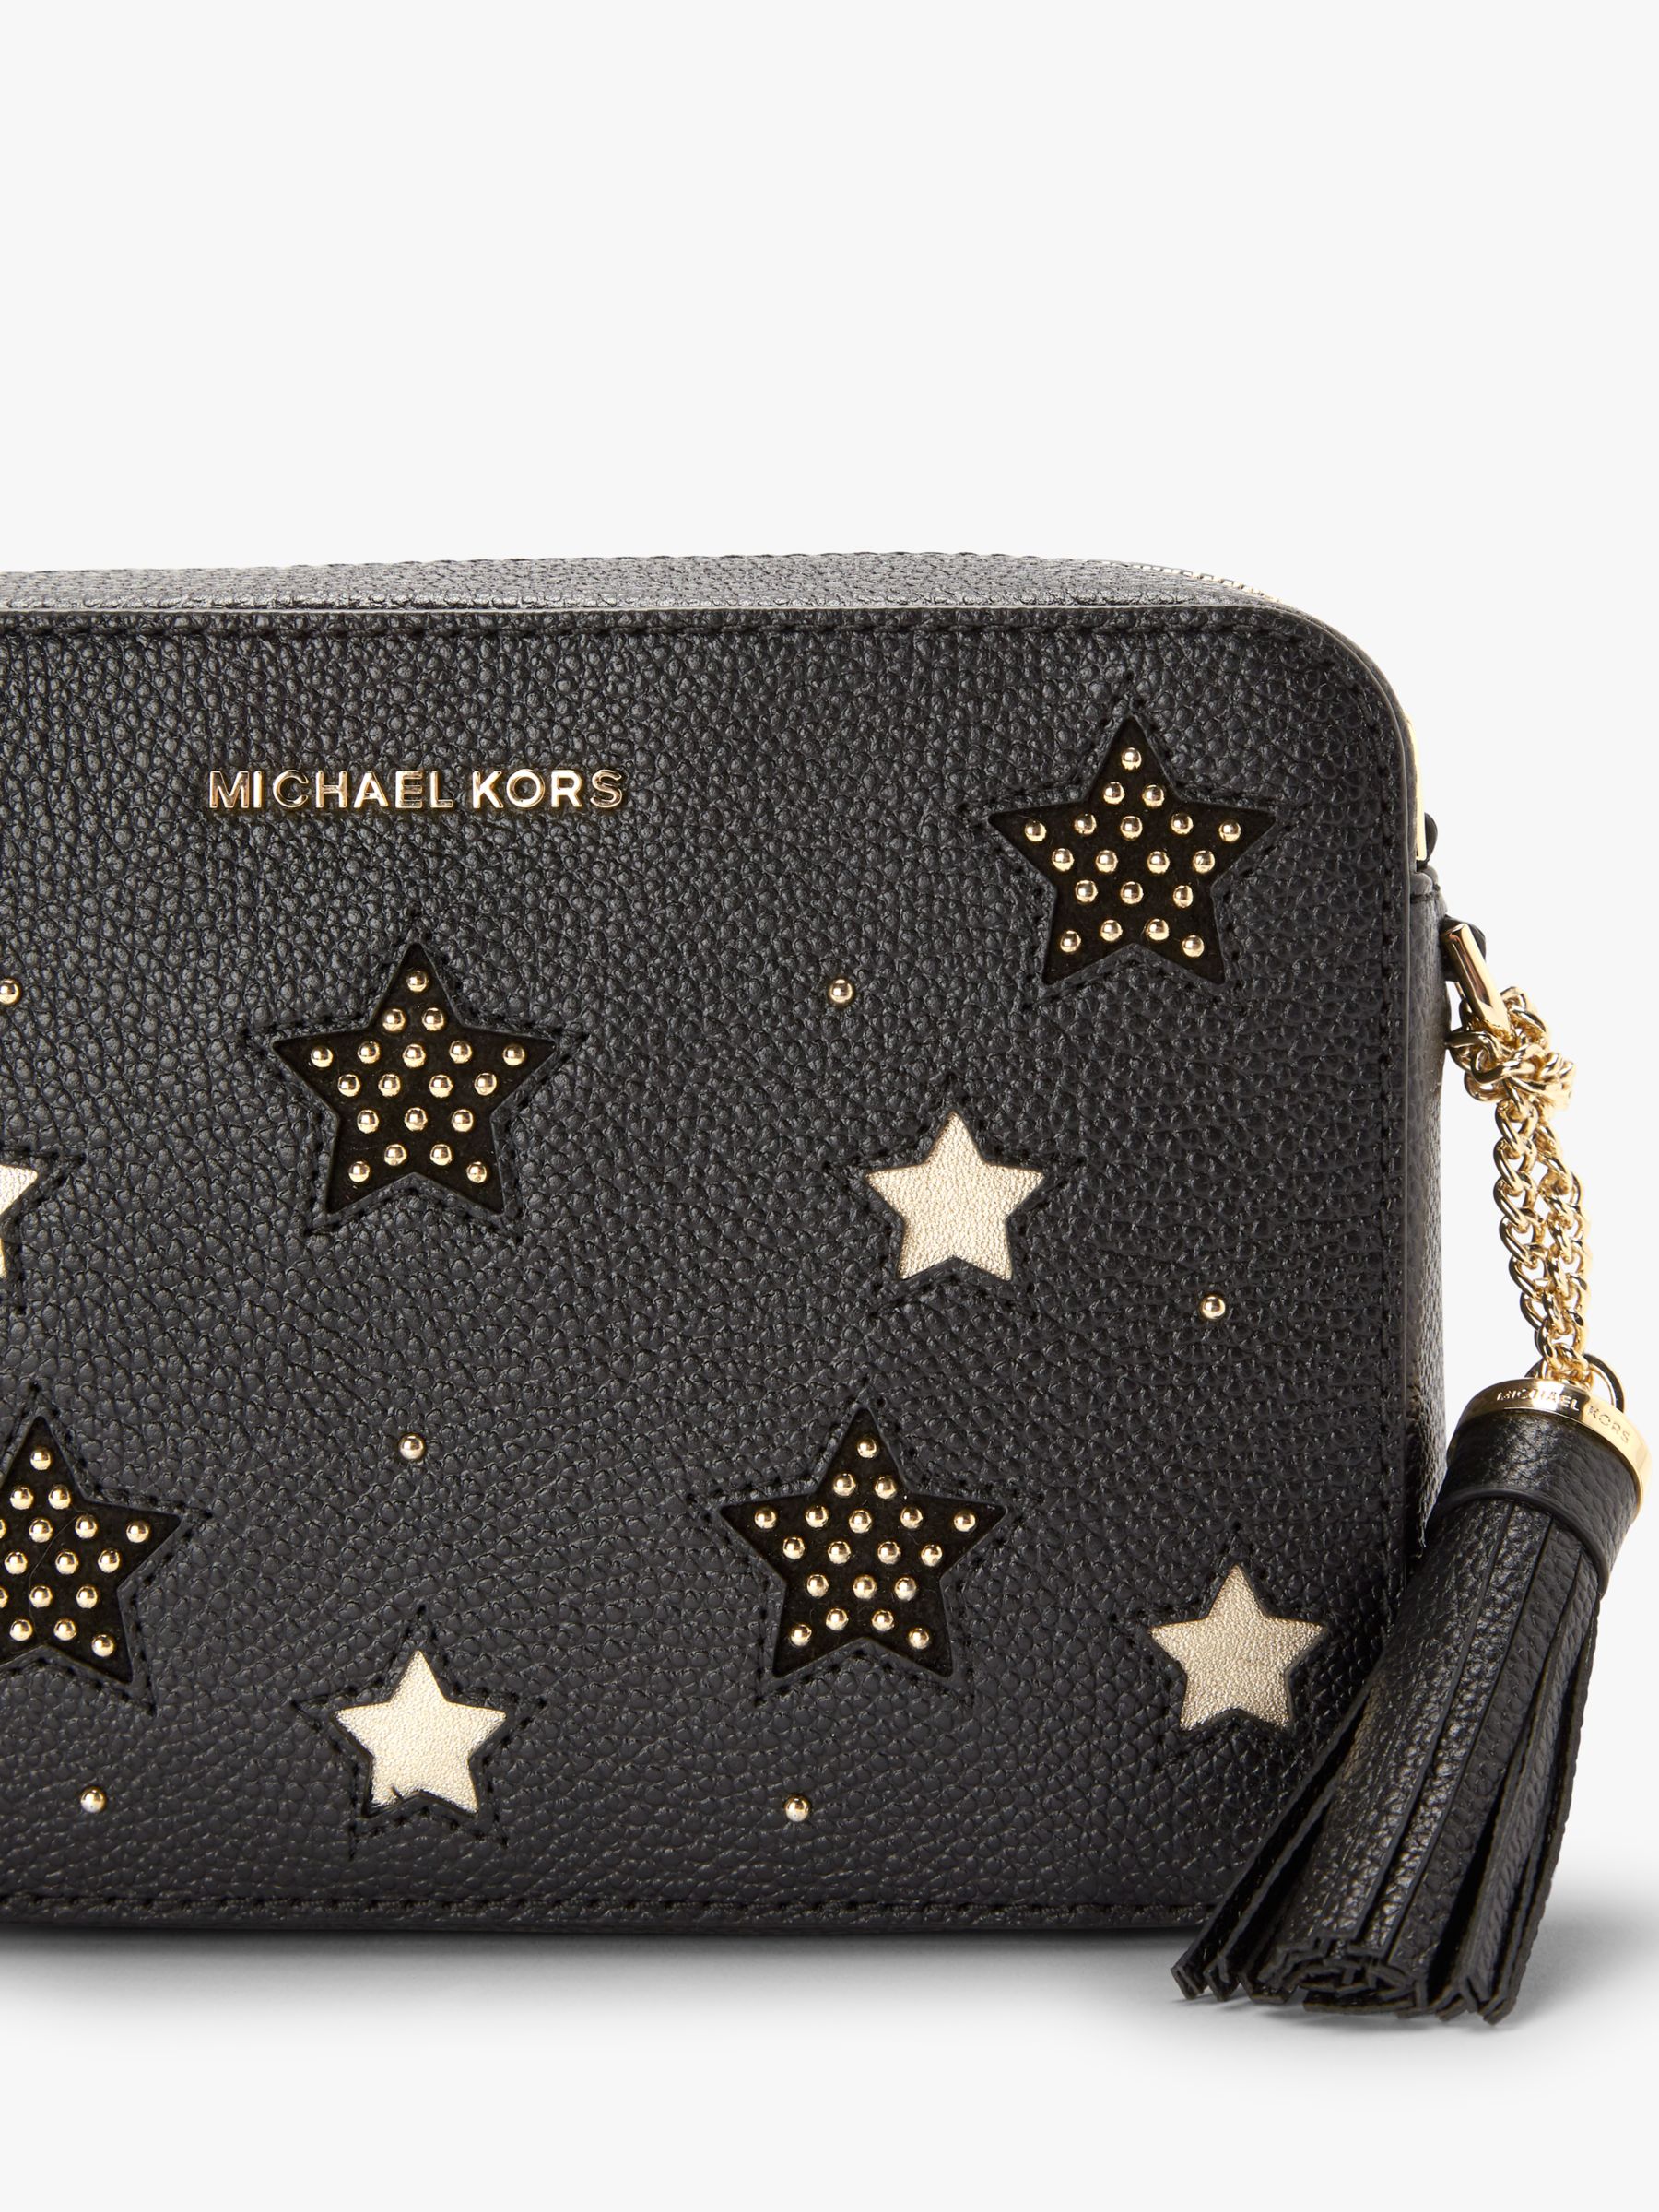 michael kors purse with stars